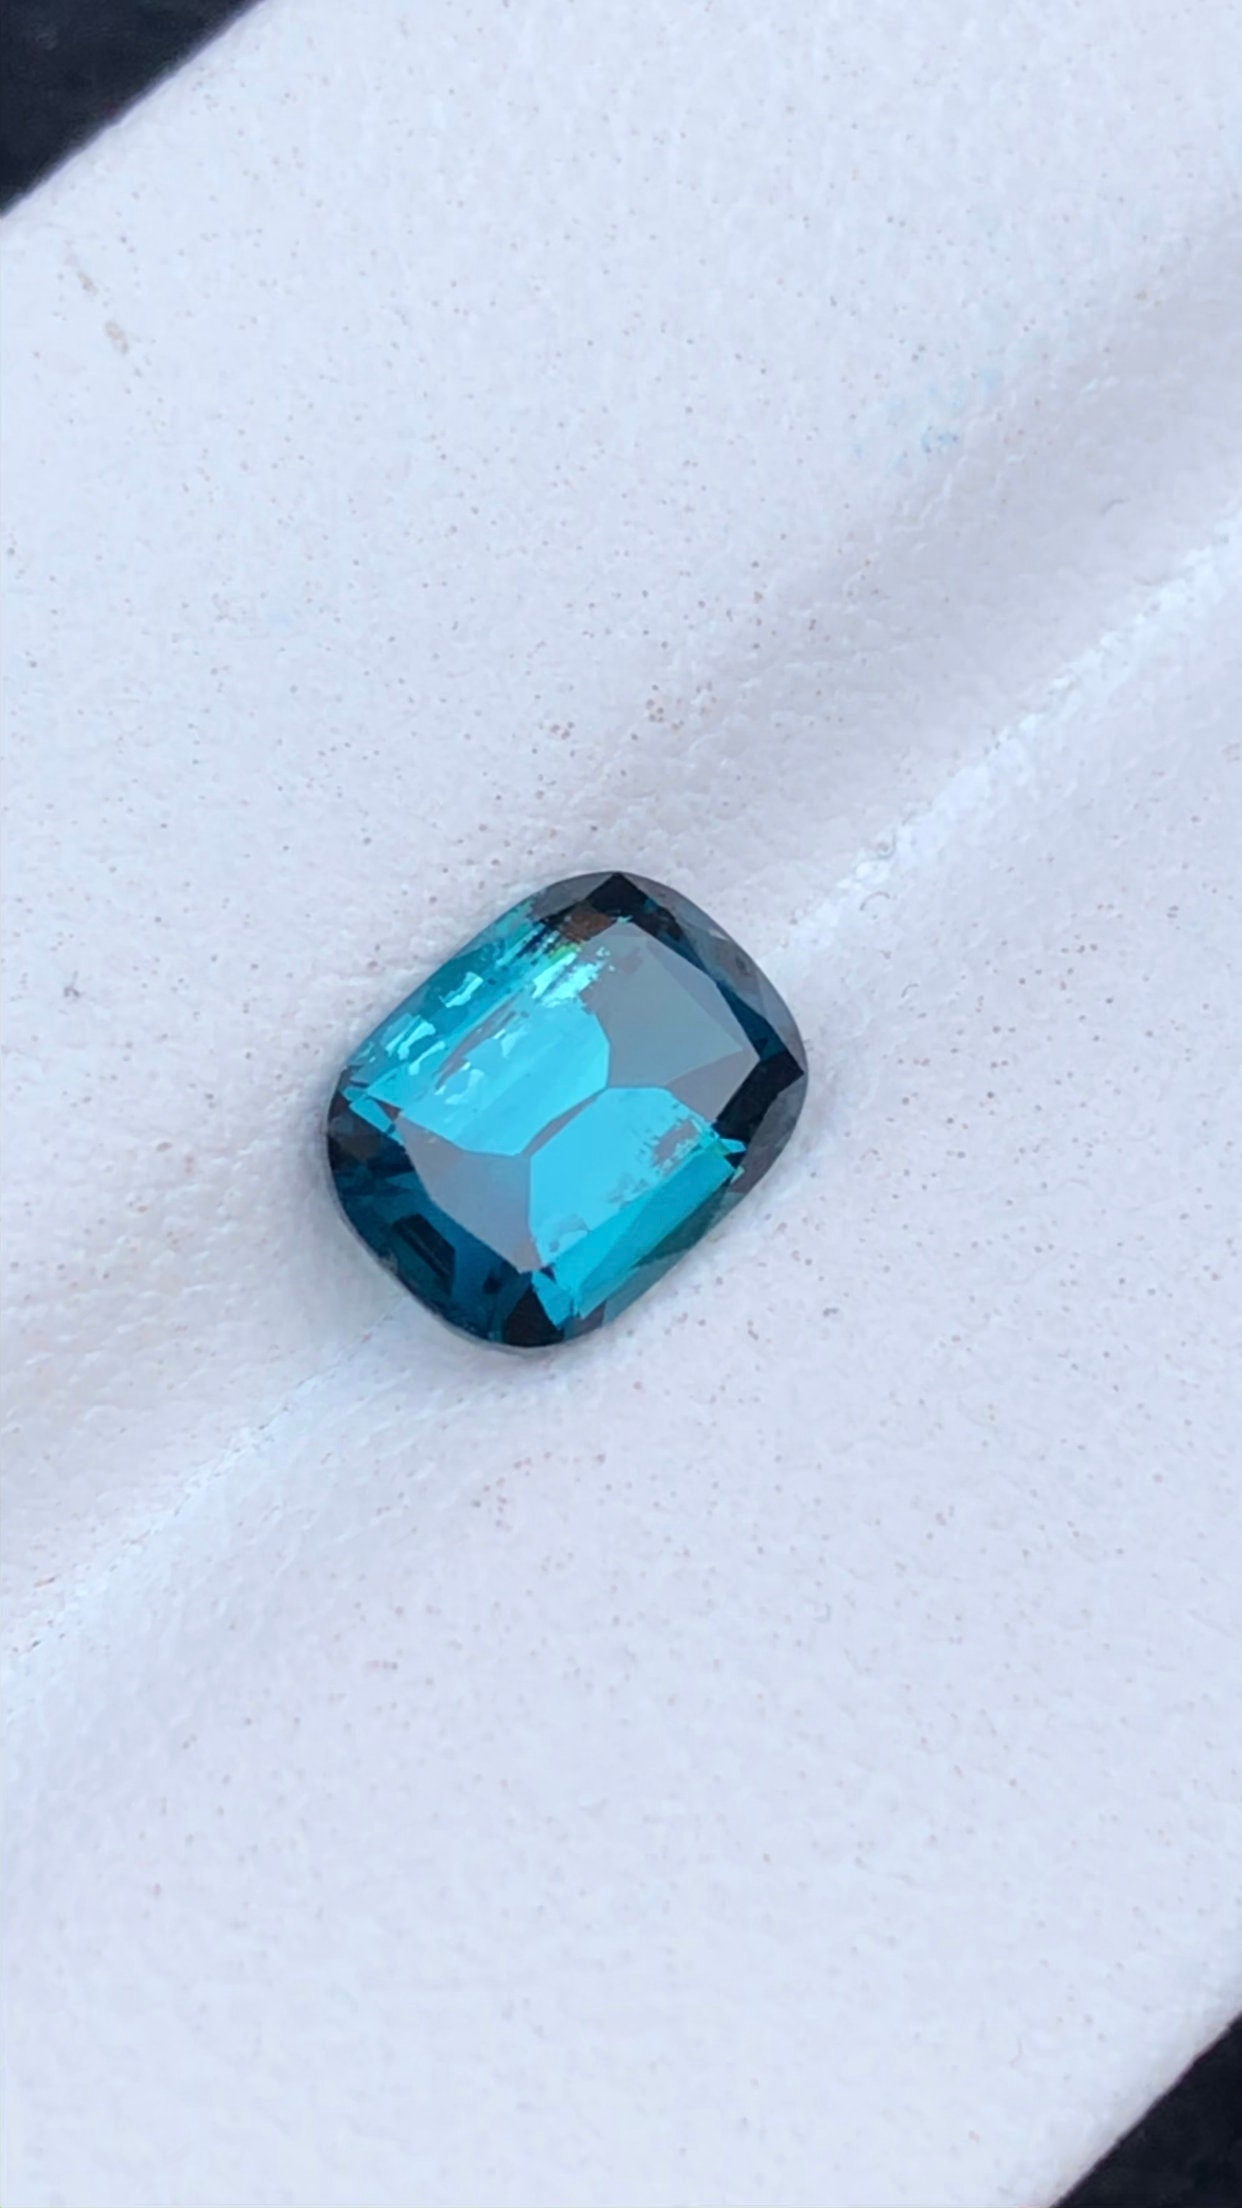 1.25 carat faceted blue tourmaline origin Afghanistan 100% natural 7.5*6*4mm